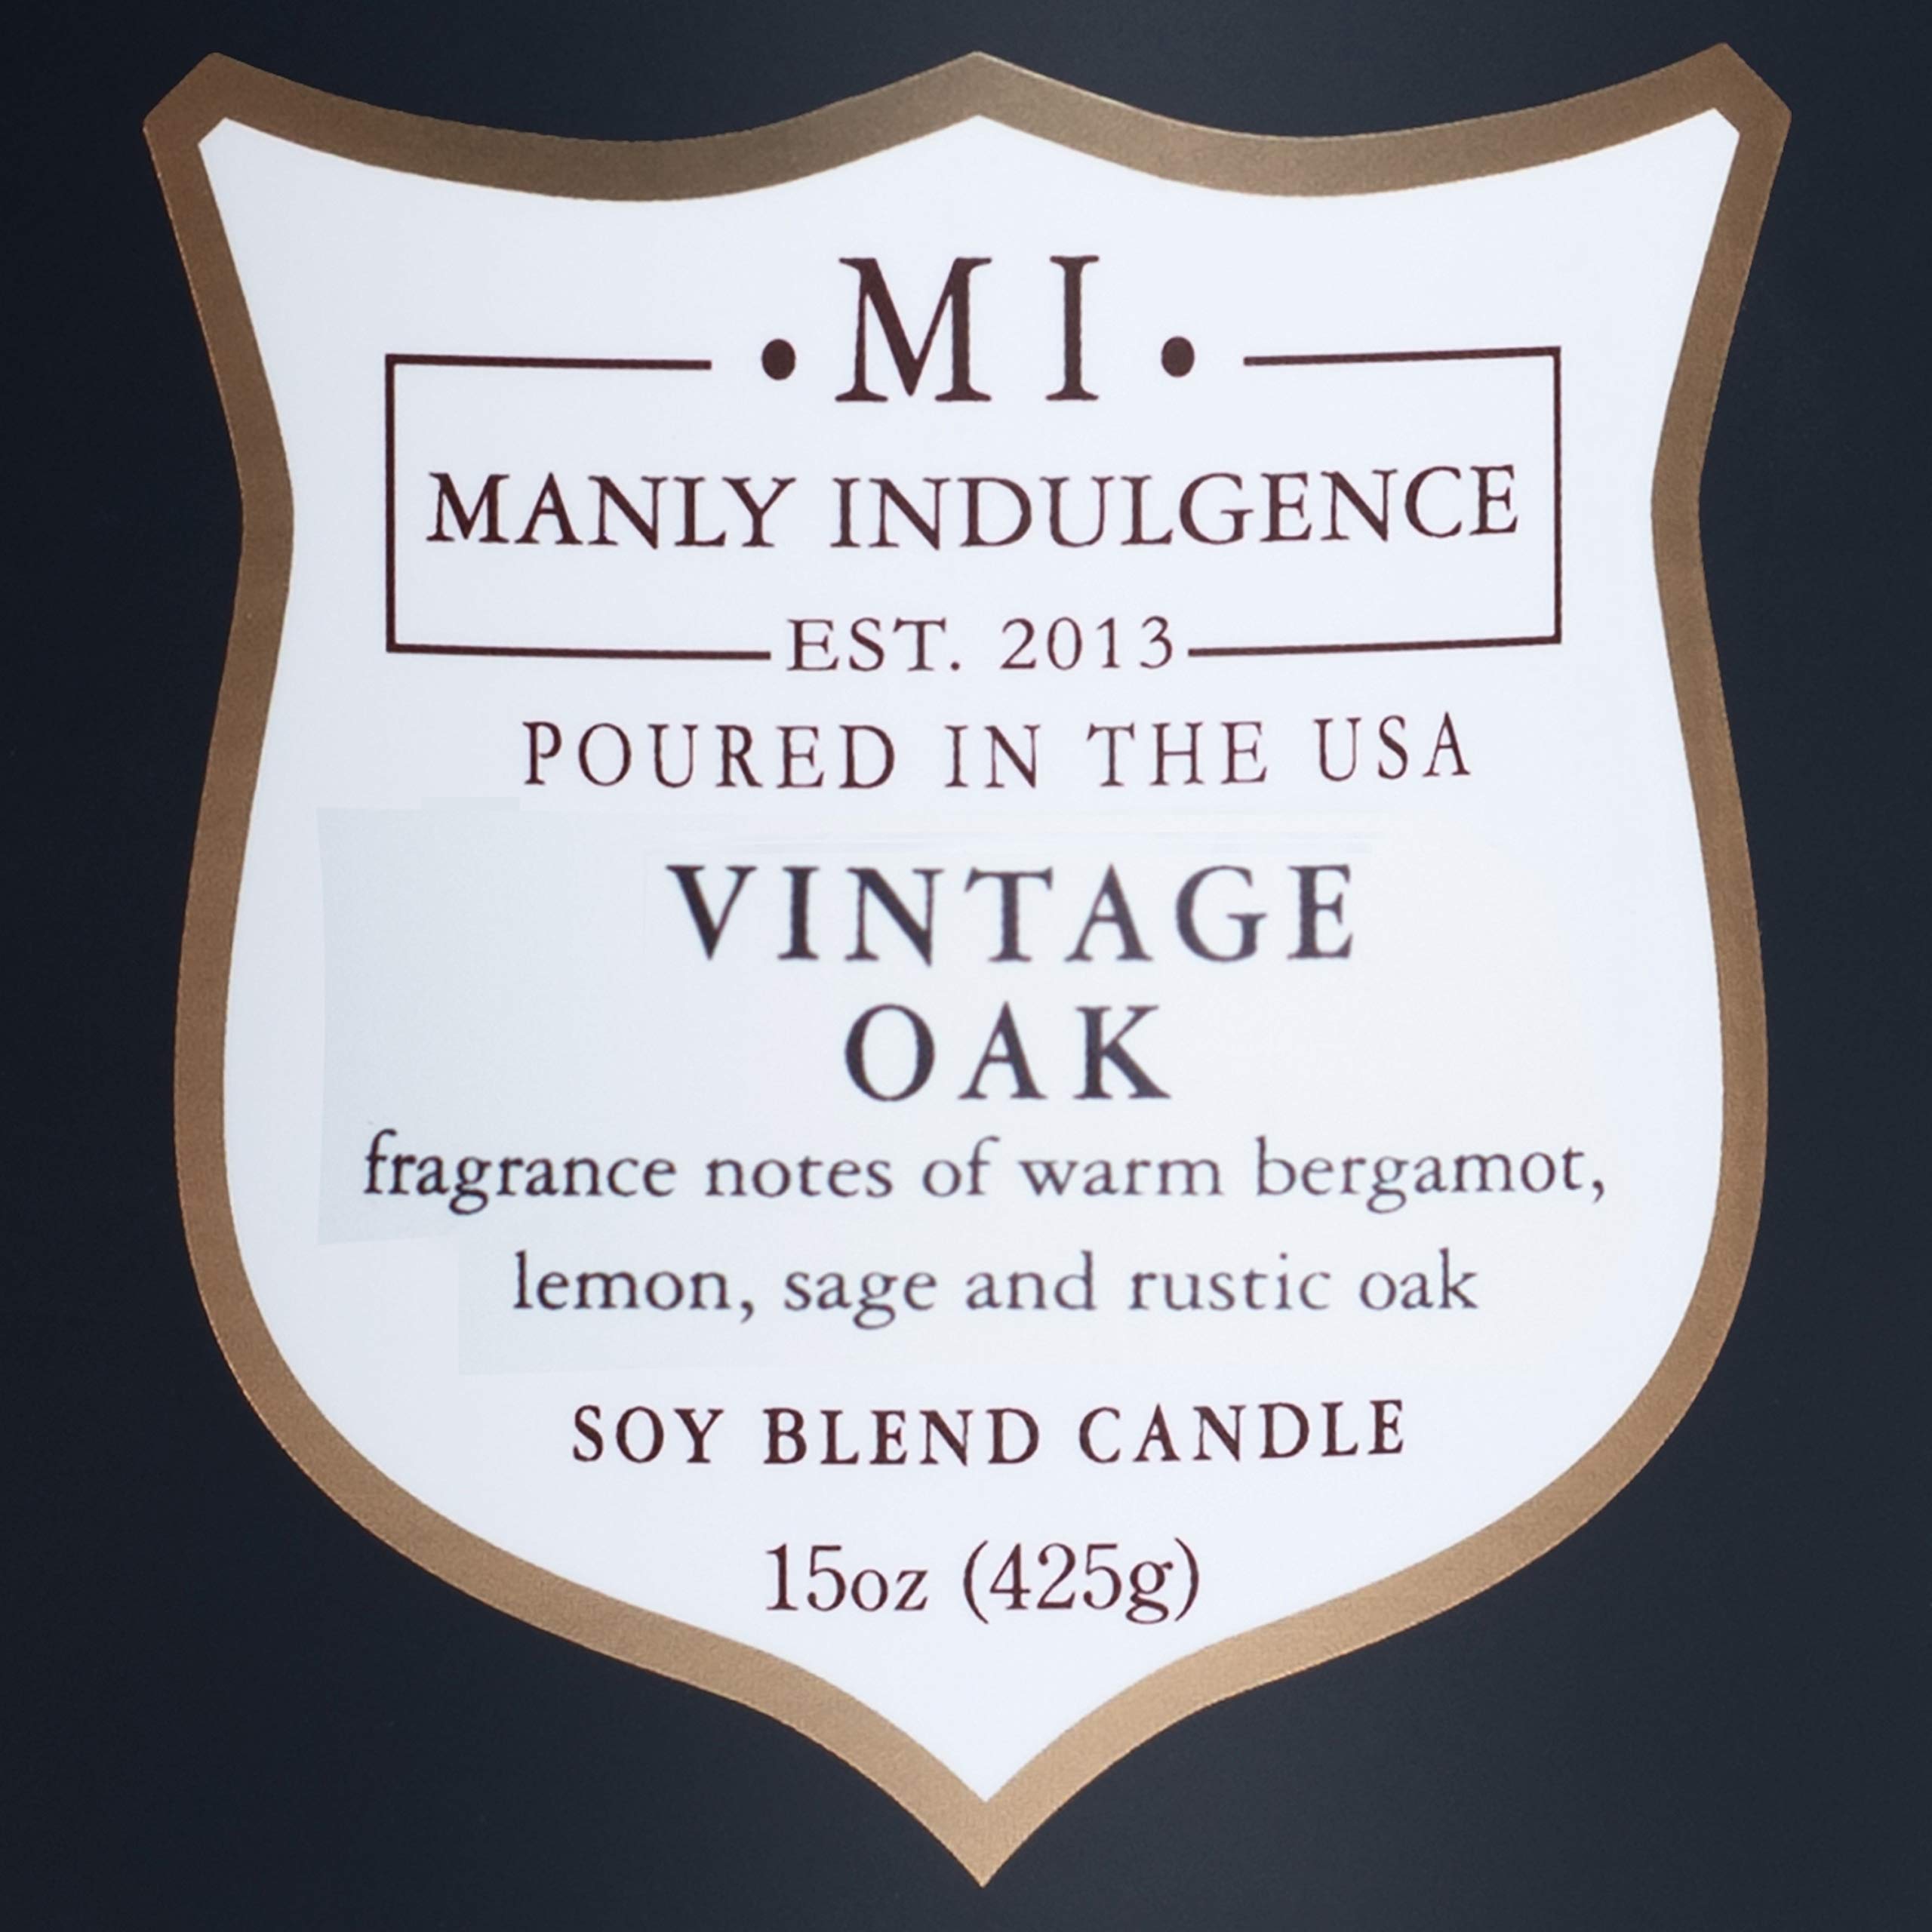 Manly Indulgence Vintage Oak Scented Jar Candle for Men, Wood Wicked Candle, 15 oz - Bergamot, Lemon, Sage & Rustic Oak - Up to 60 Hours Burn, Soy Blend Wax, USA Poured